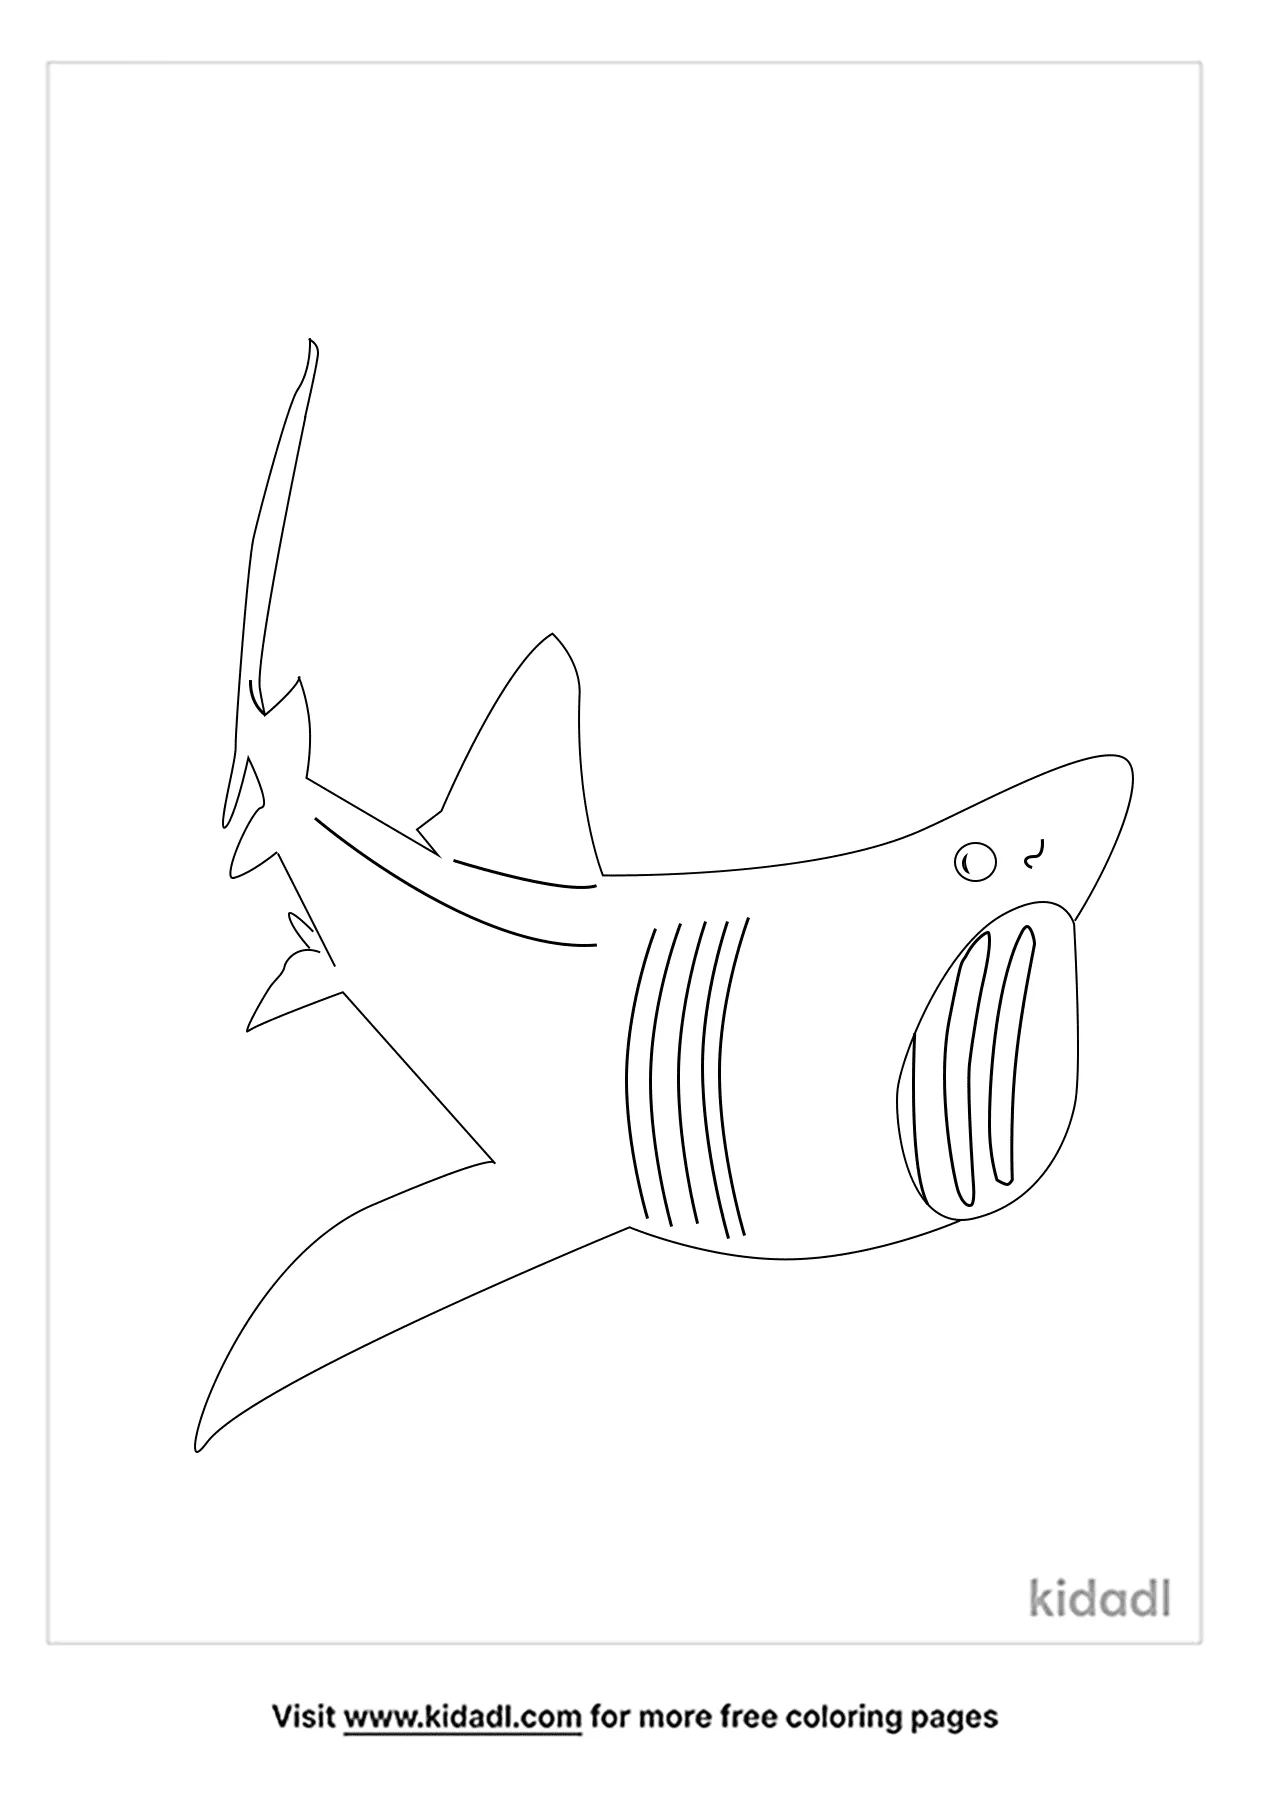 Basking Shark Coloring Page